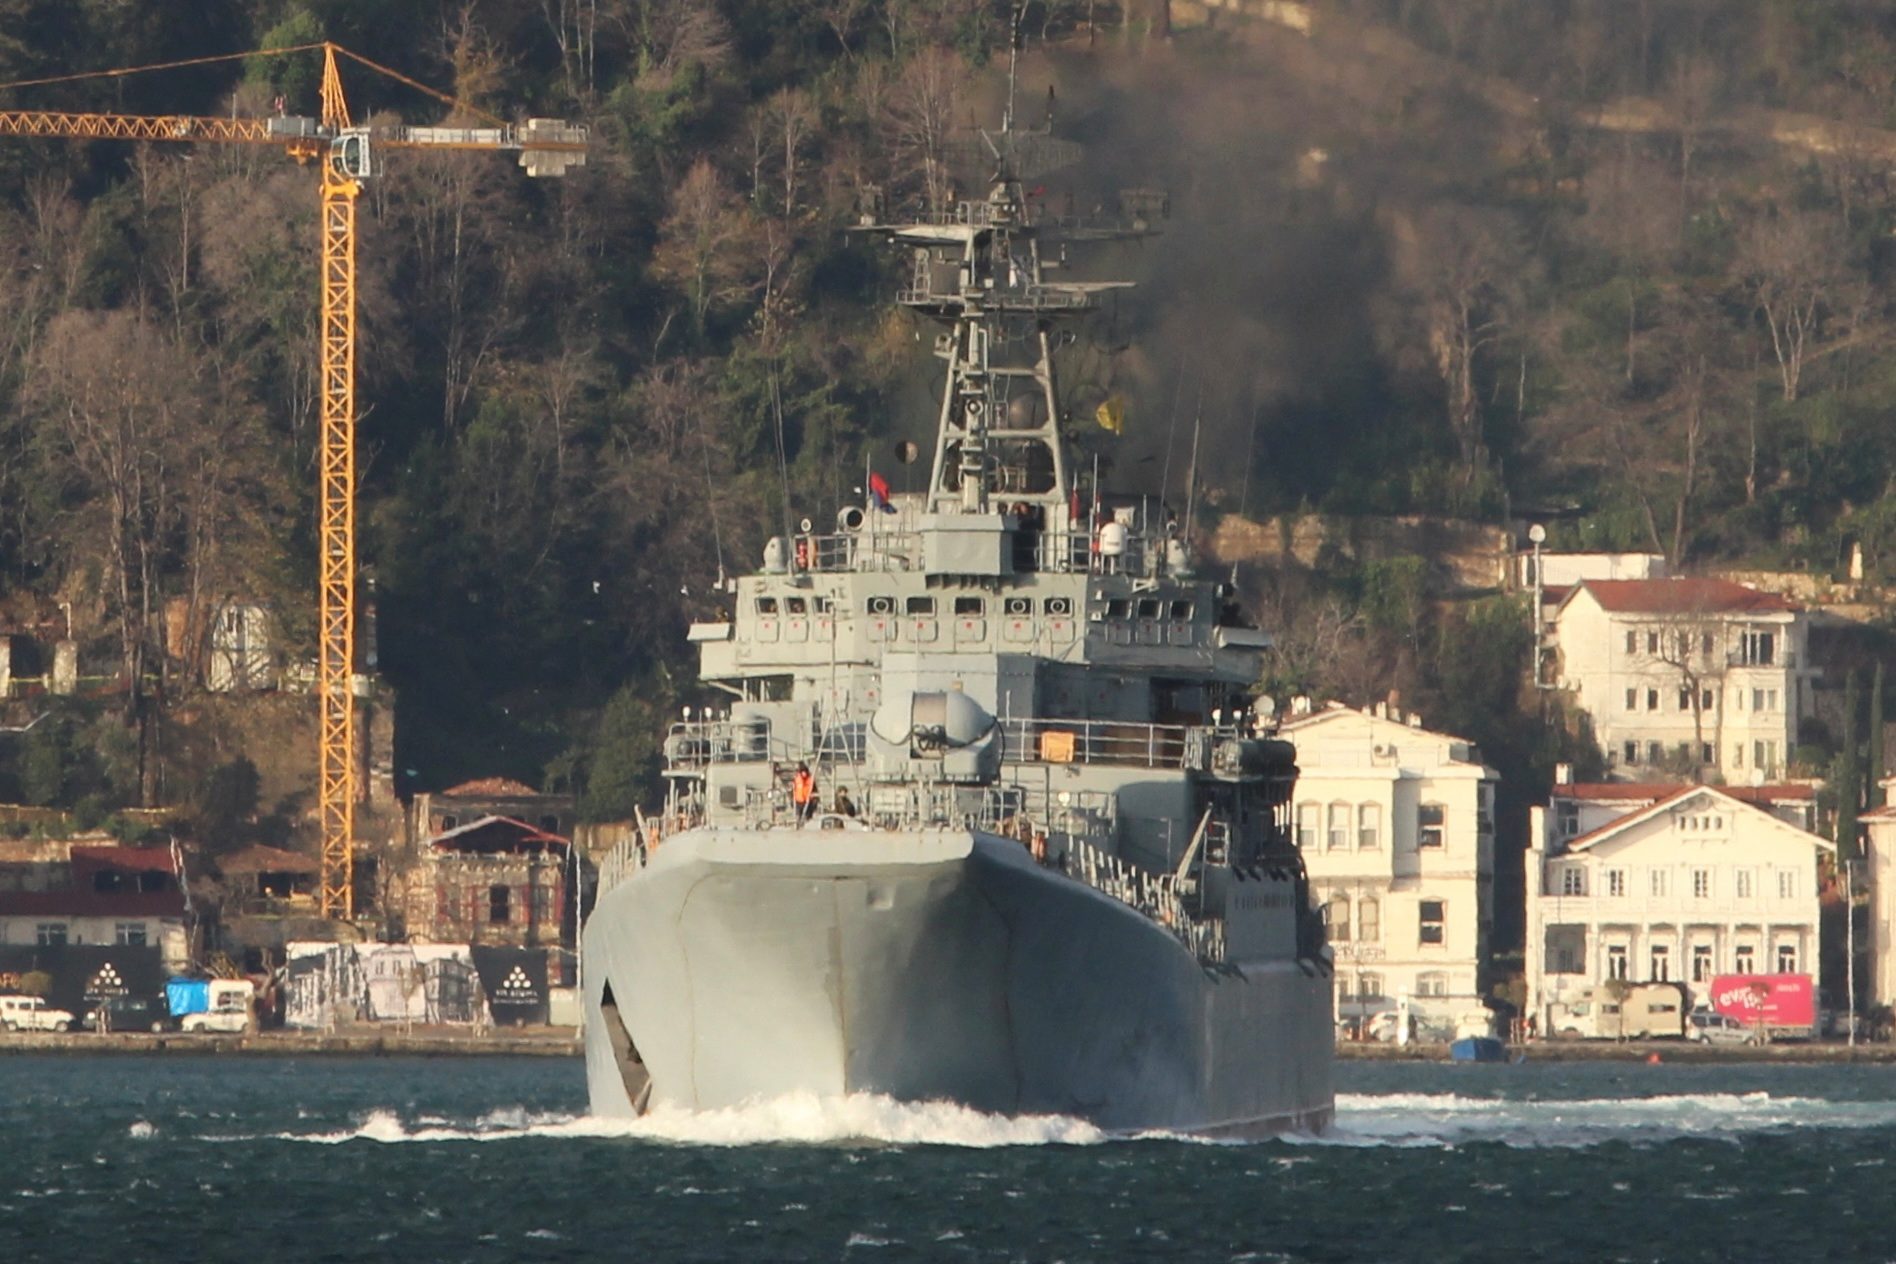 The Russian Navy landing ship Yamal sets sail in Istanbul's Bosphorus. REUTERS/Yoruk Isik